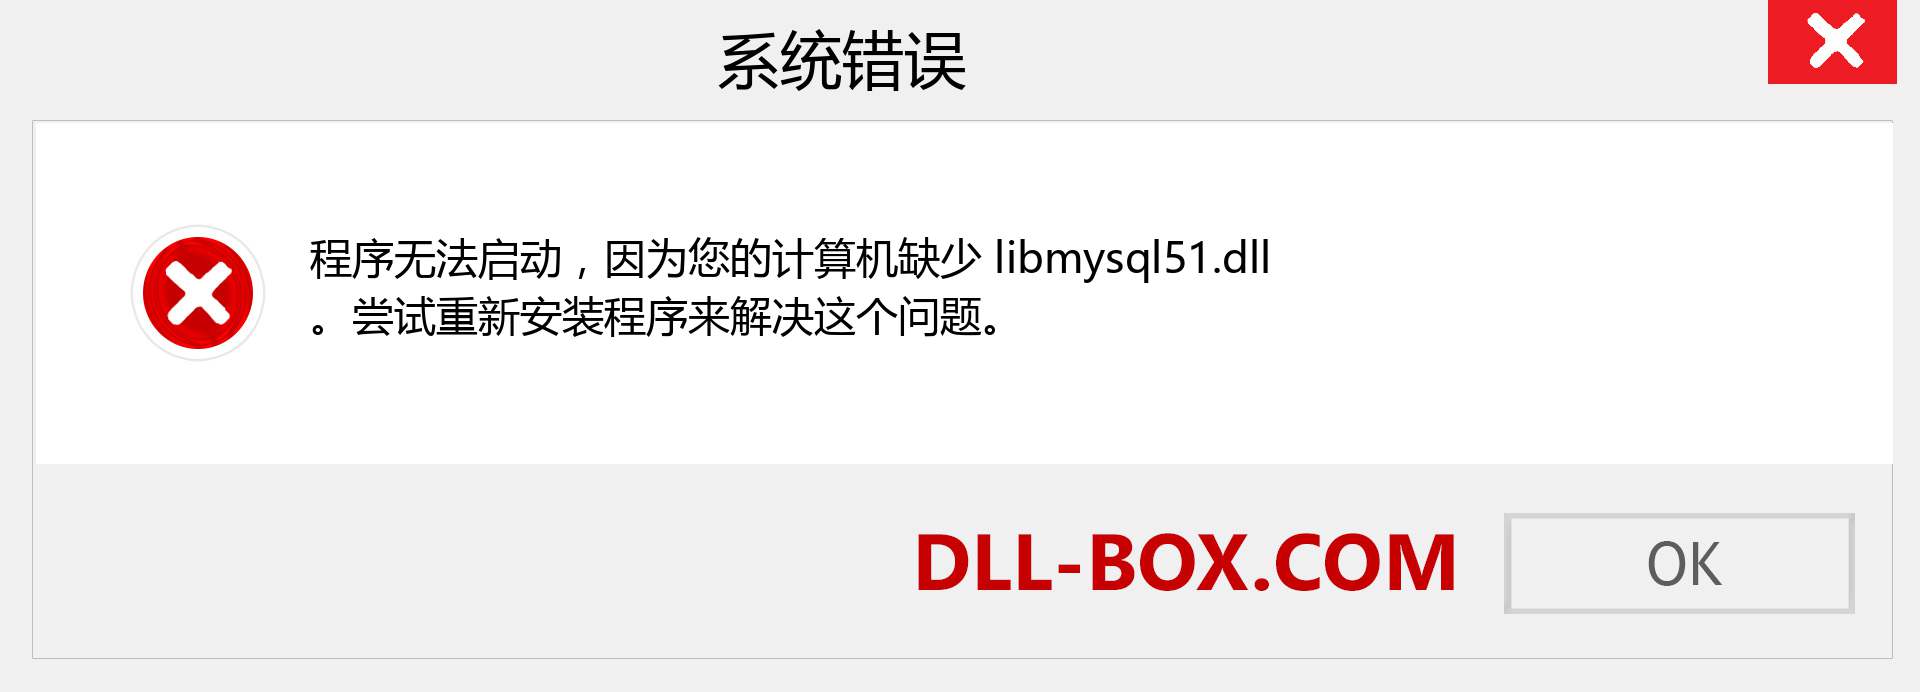 libmysql51.dll 文件丢失？。 适用于 Windows 7、8、10 的下载 - 修复 Windows、照片、图像上的 libmysql51 dll 丢失错误